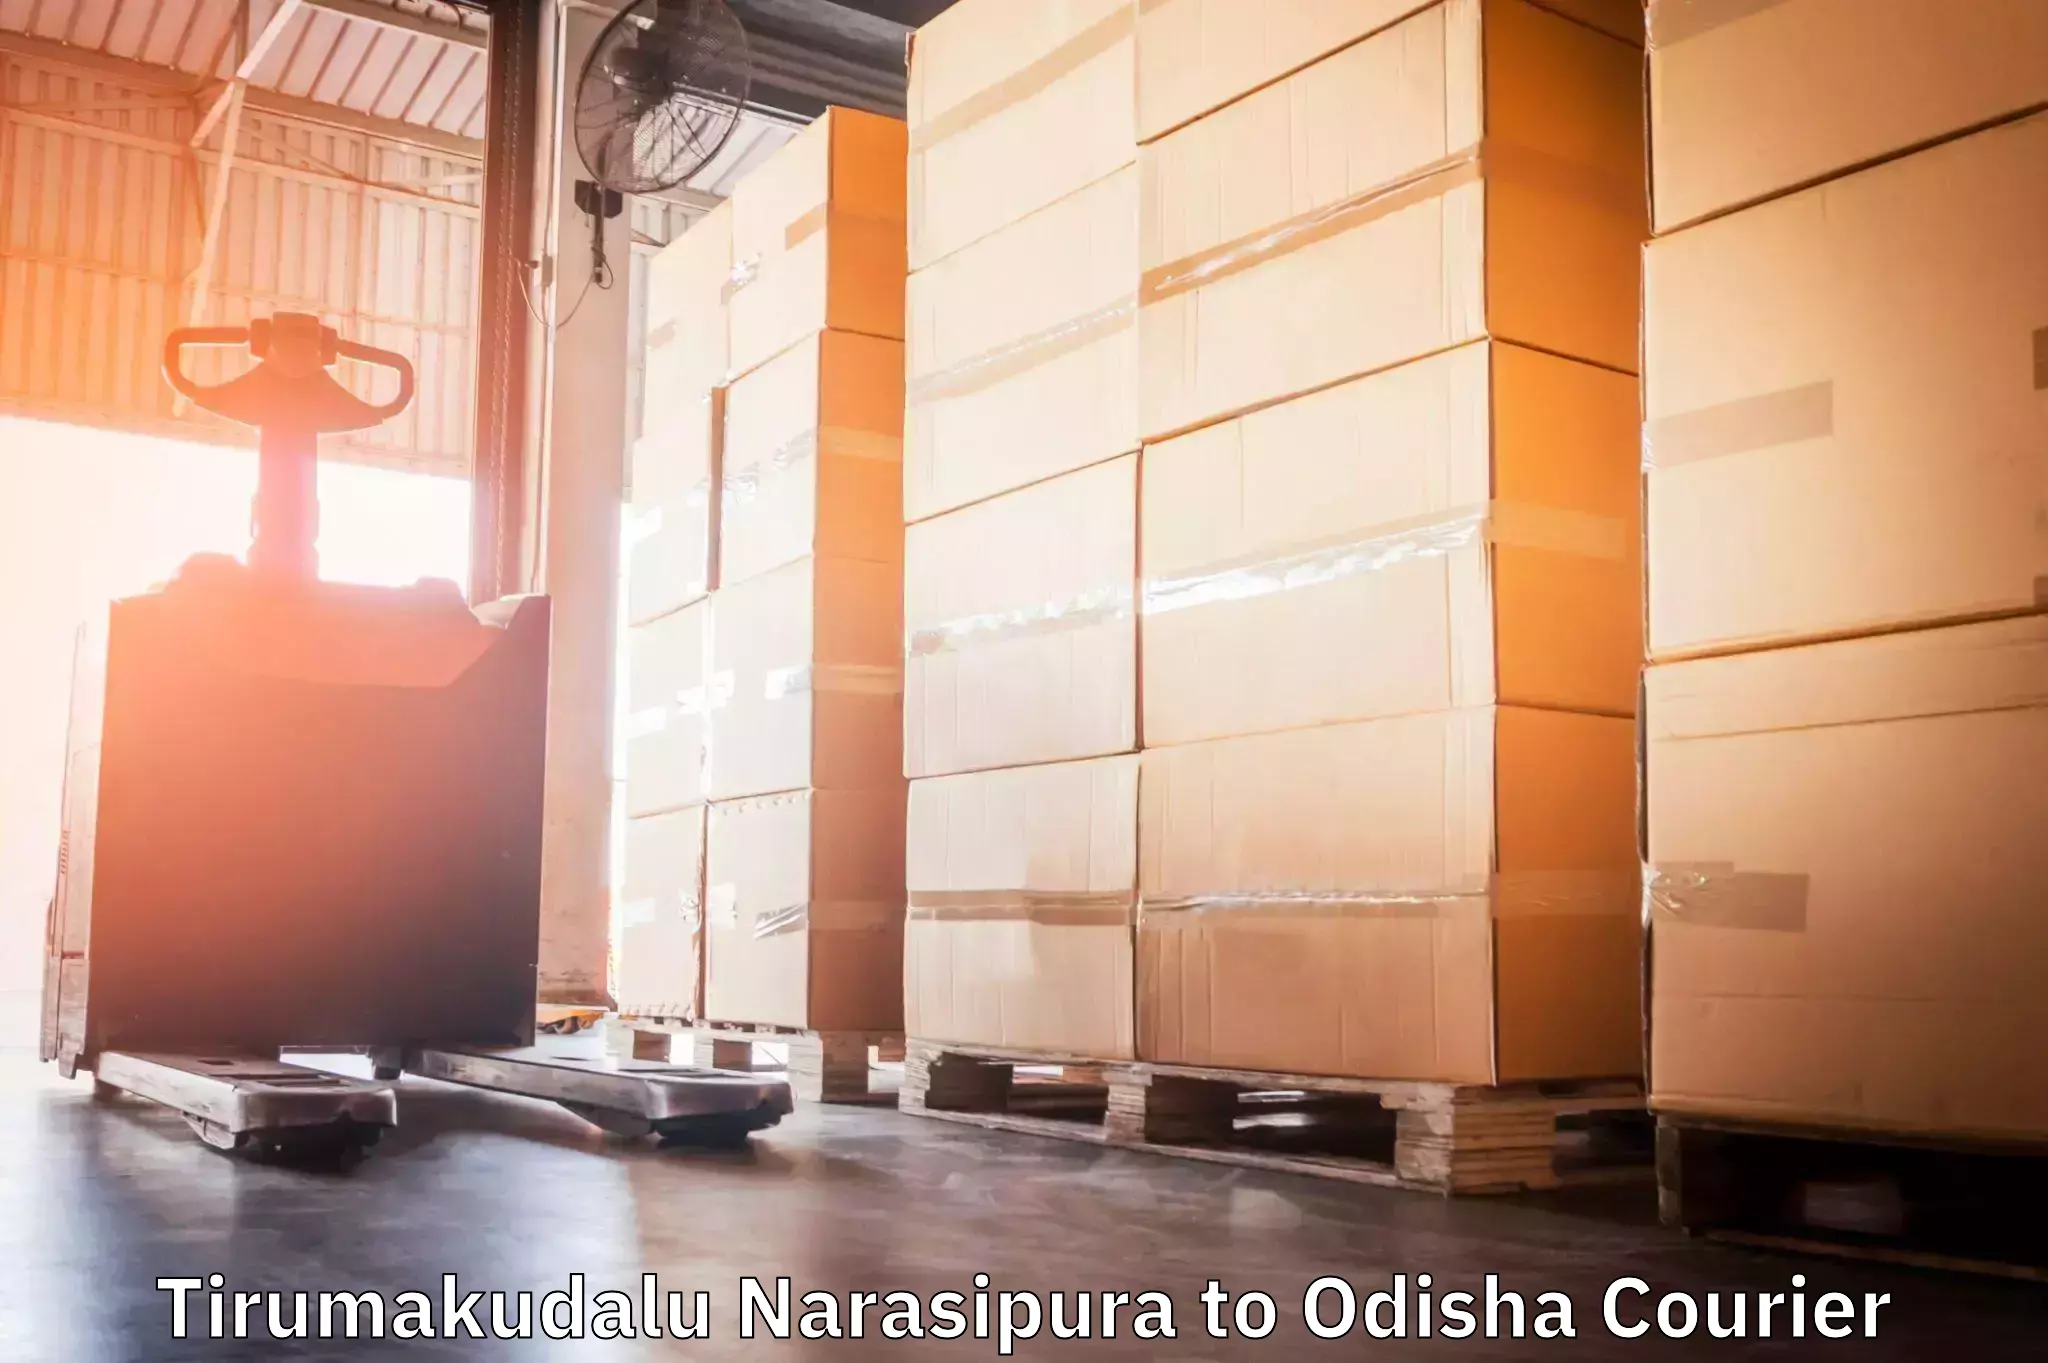 Urgent courier needs Tirumakudalu Narasipura to Odisha